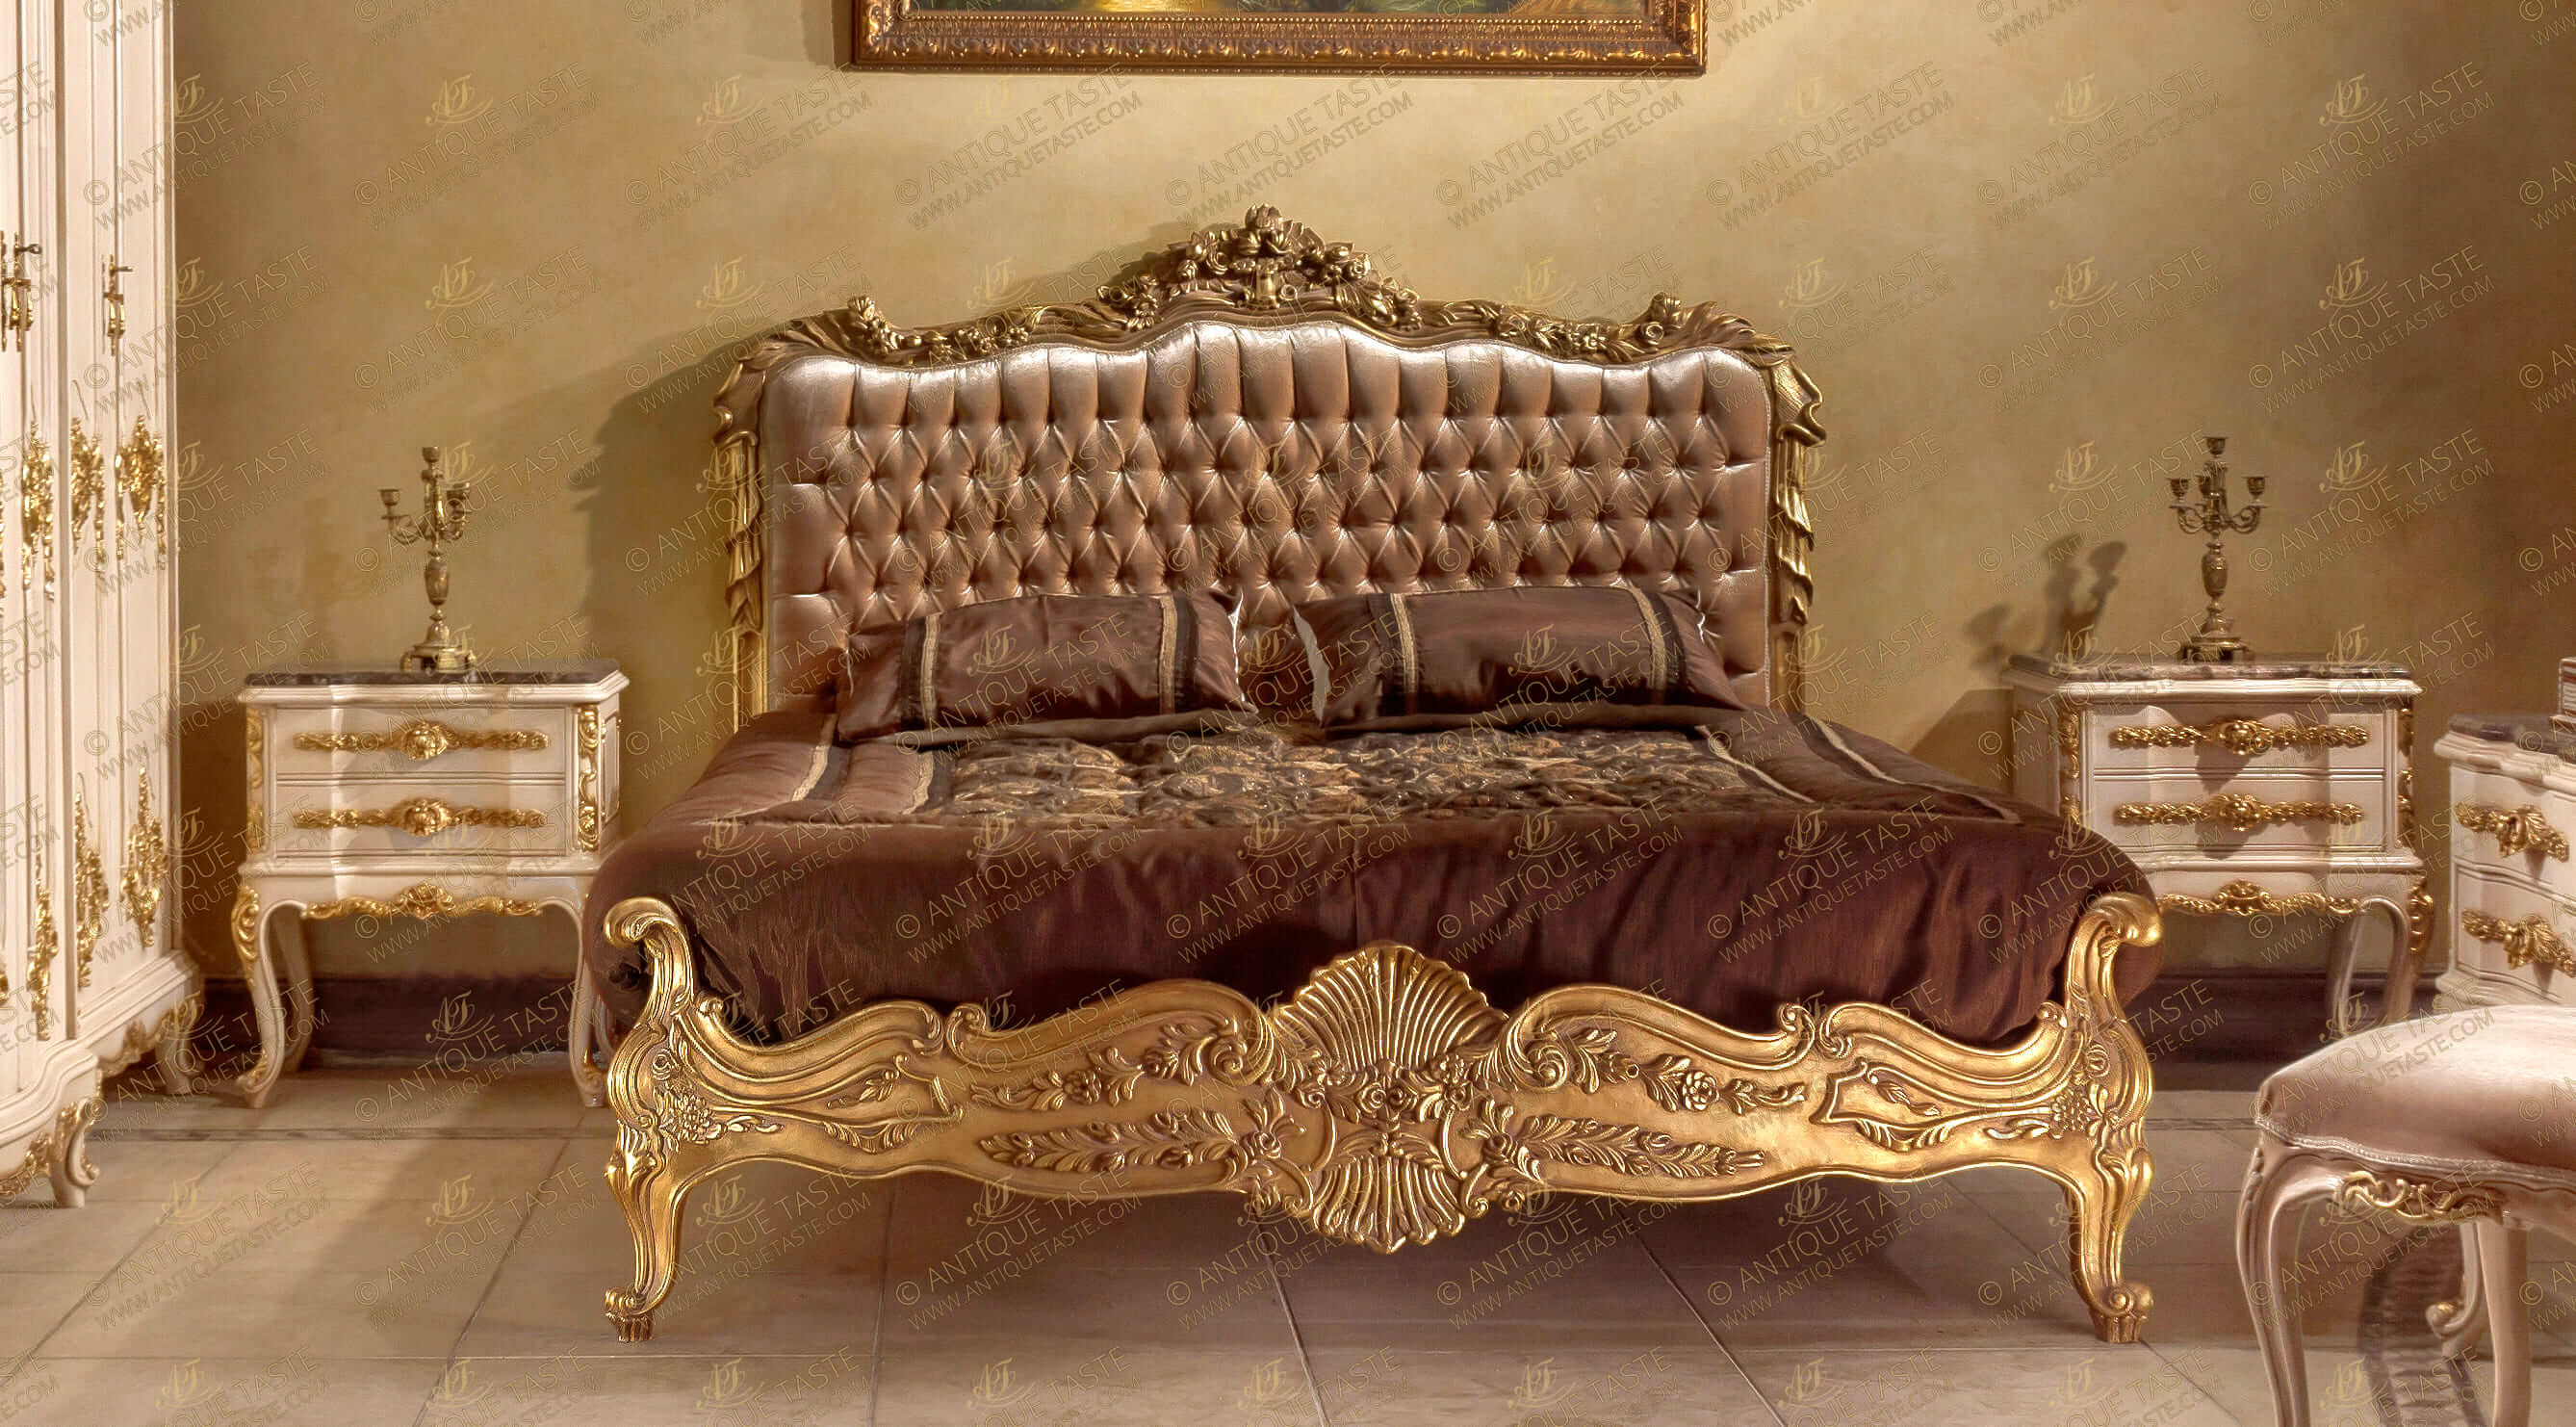 19th century italian baroque style bedroom set